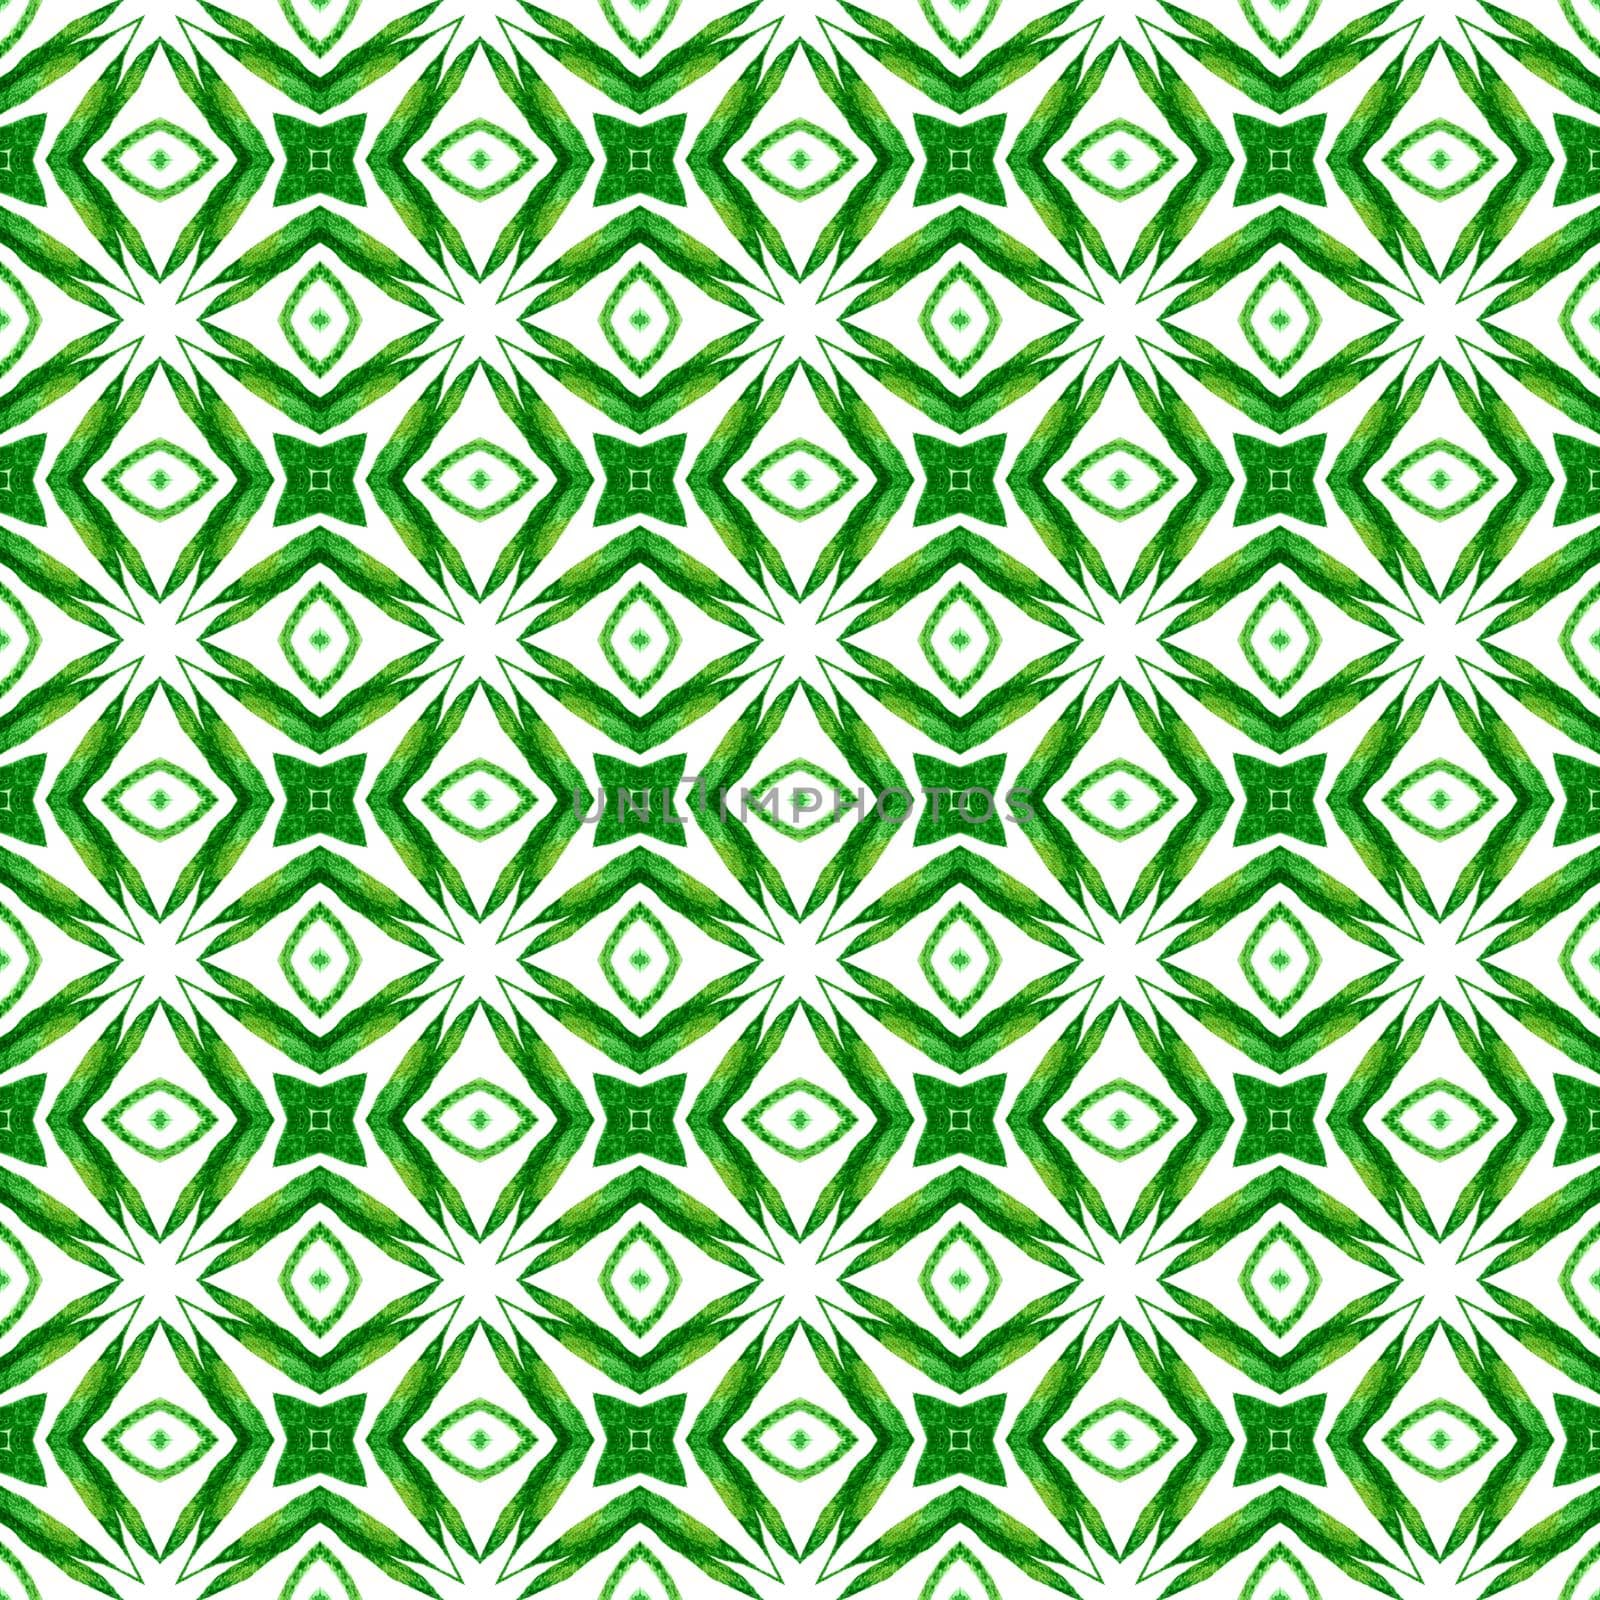 Oriental arabesque hand drawn border. Green bold by beginagain